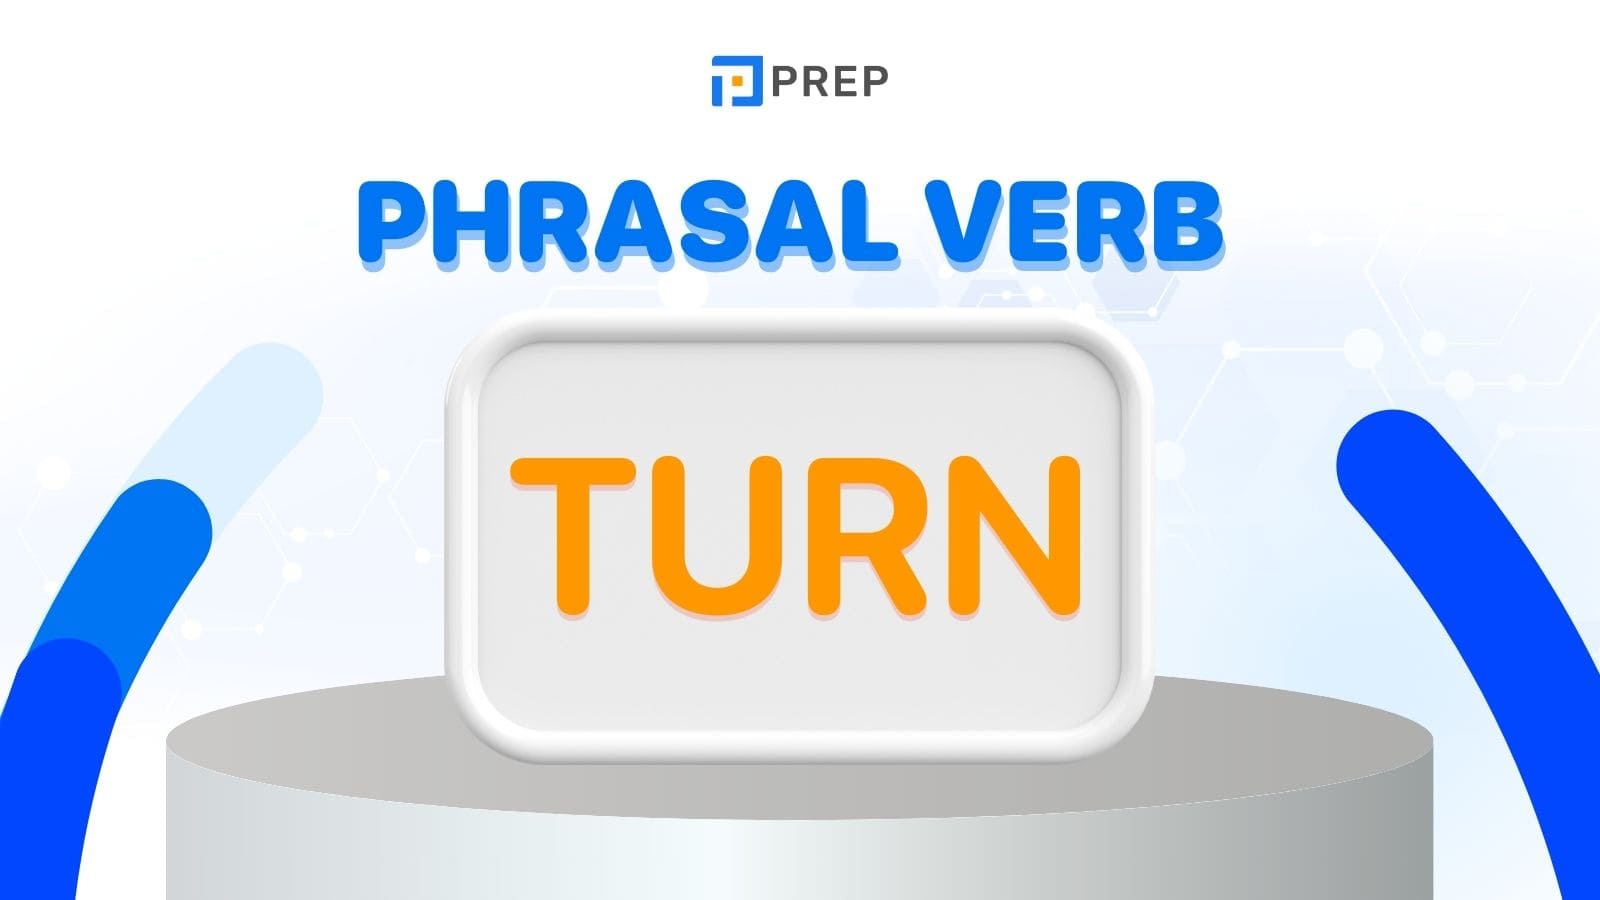 phrasal-verb-turn.jpg